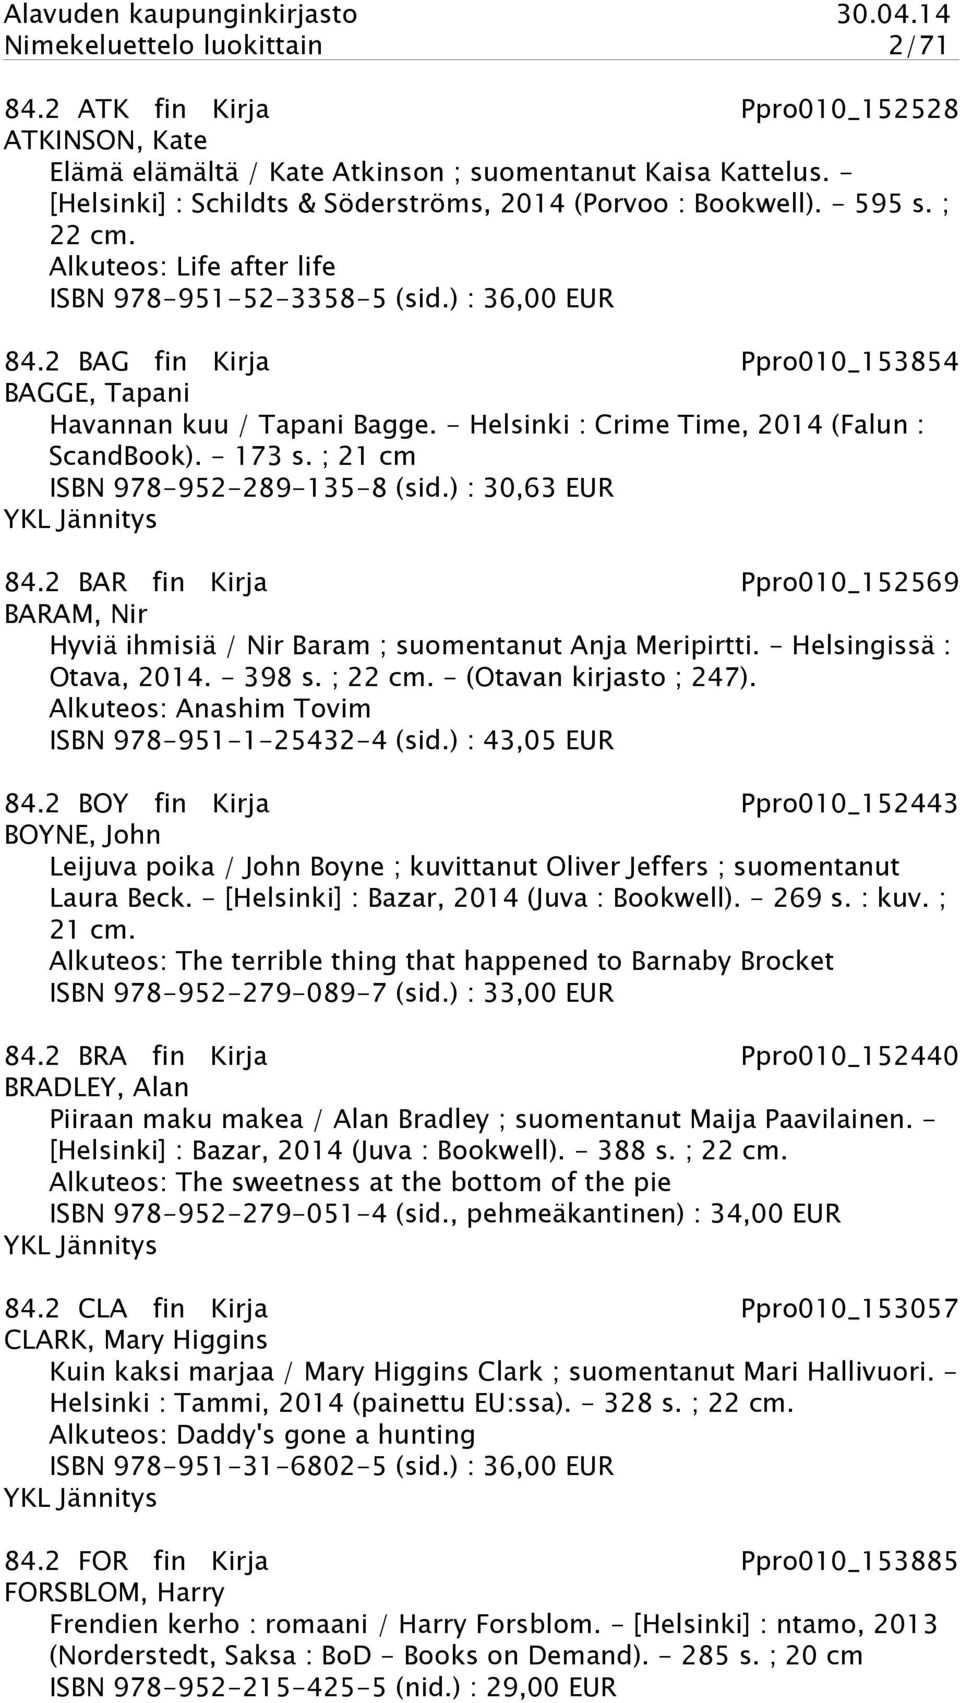 2 BAG fin Kirja Ppro010_153854 BAGGE, Tapani Havannan kuu / Tapani Bagge. - Helsinki : Crime Time, 2014 (Falun : ScandBook). - 173 s. ; 21 cm ISBN 978-952-289-135-8 (sid.) : 30,63 EUR YKL Jännitys 84.